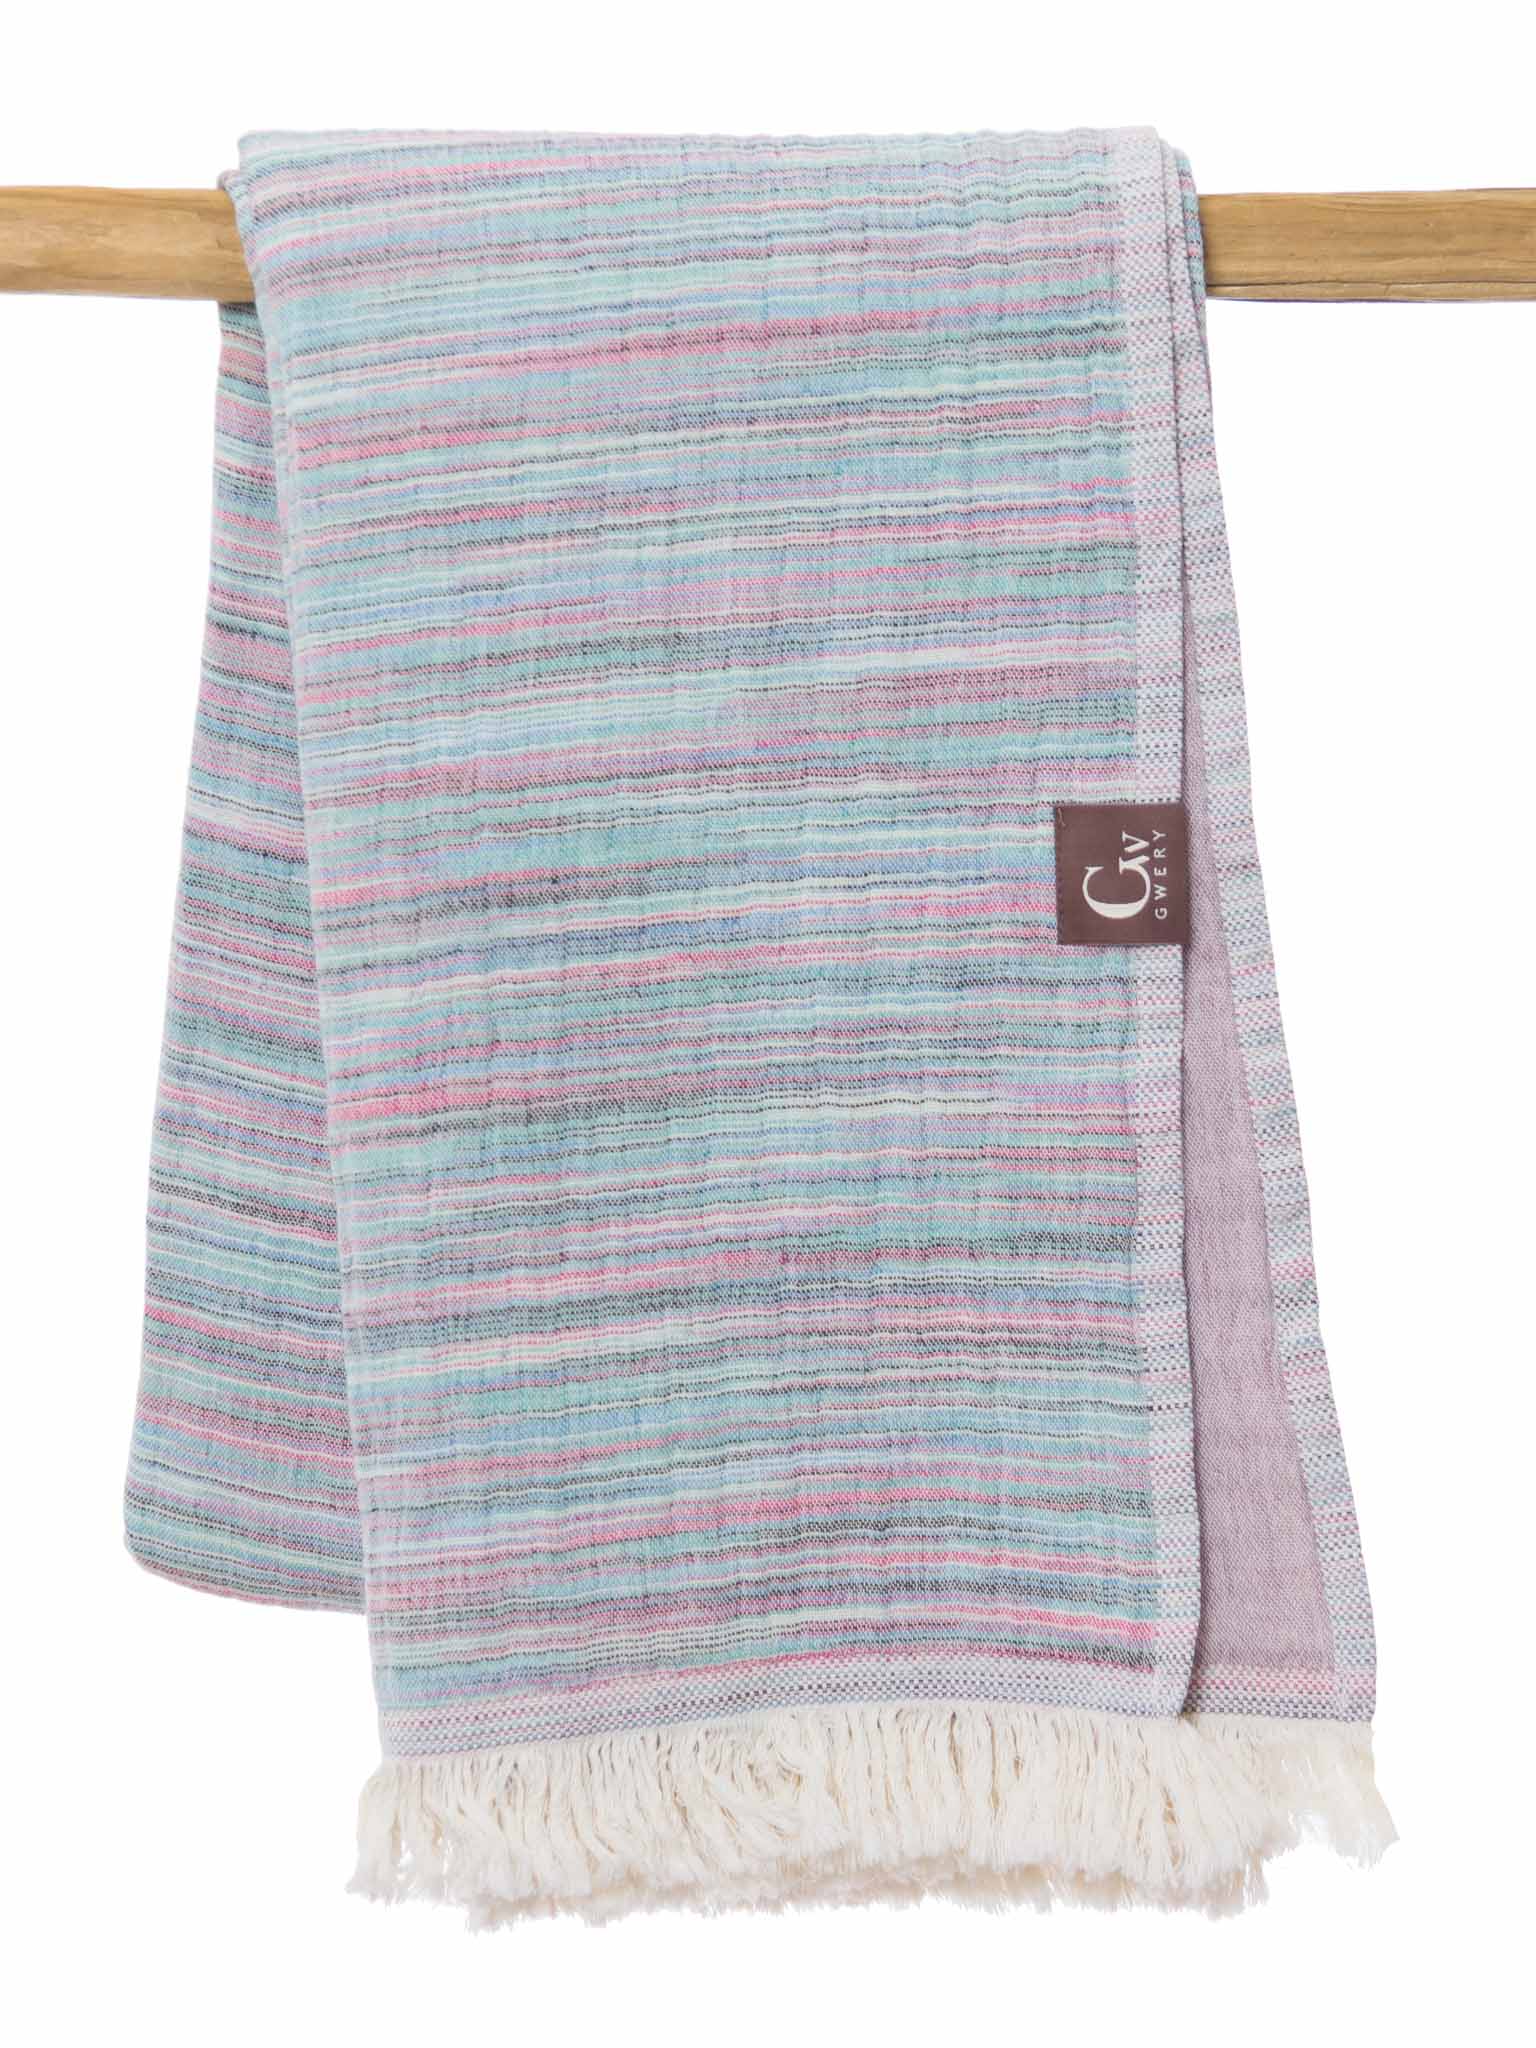 Purple patterned, double sided, beach towel folded